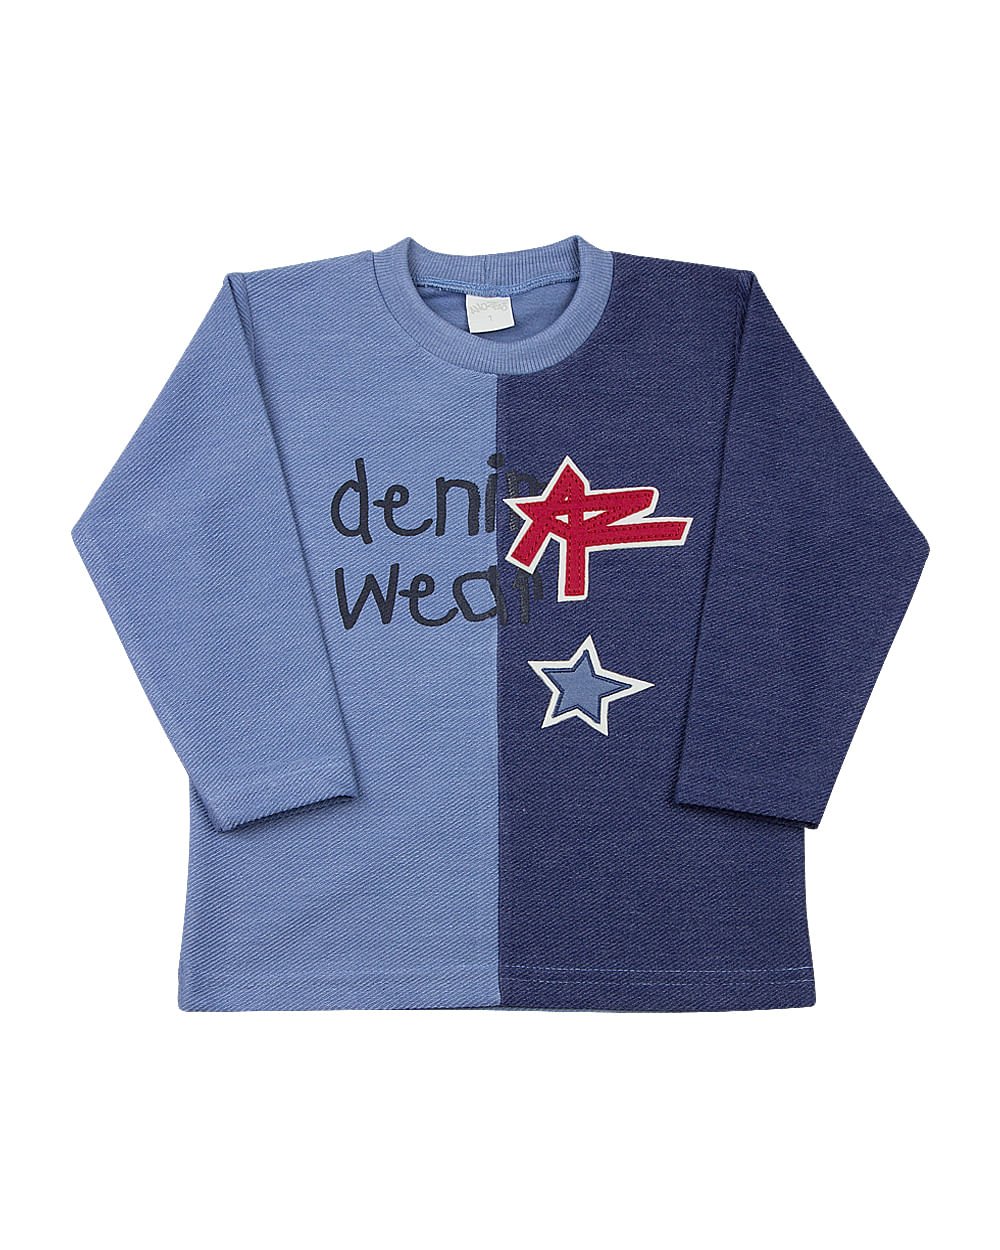 Camiseta Infantil Malha Etno Denim Wear - Azul